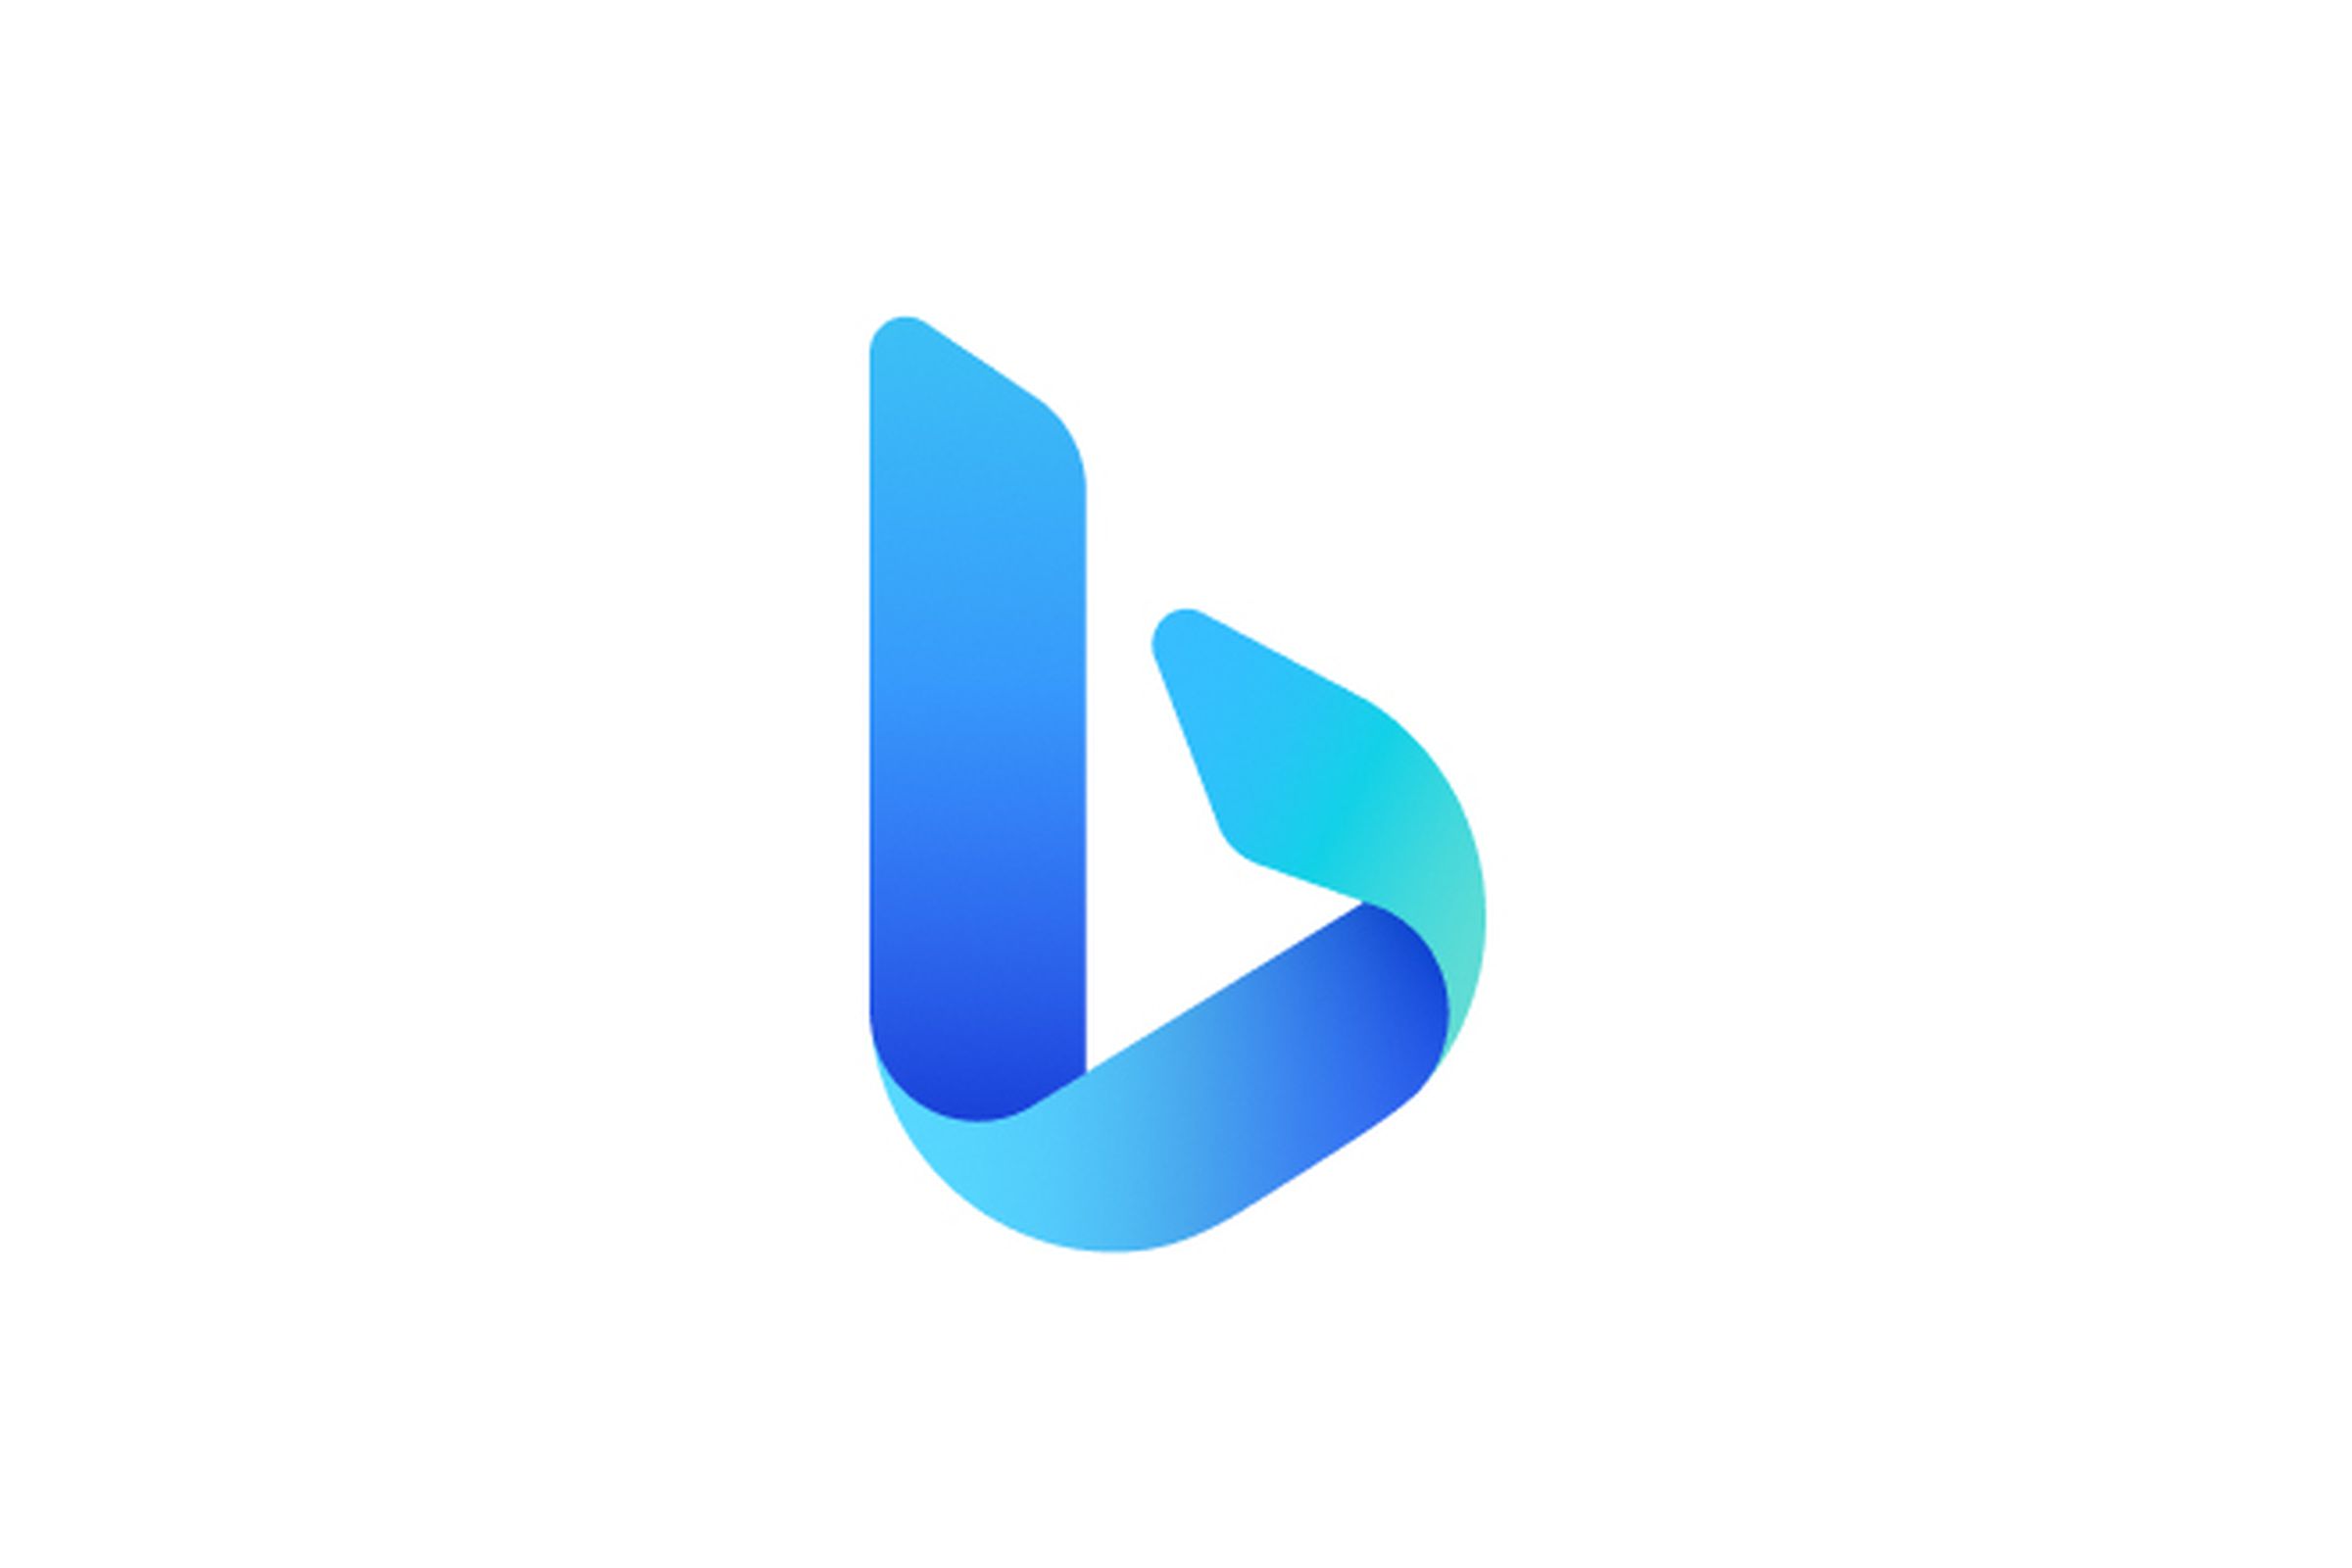 Microsoft’s new Bing logo.